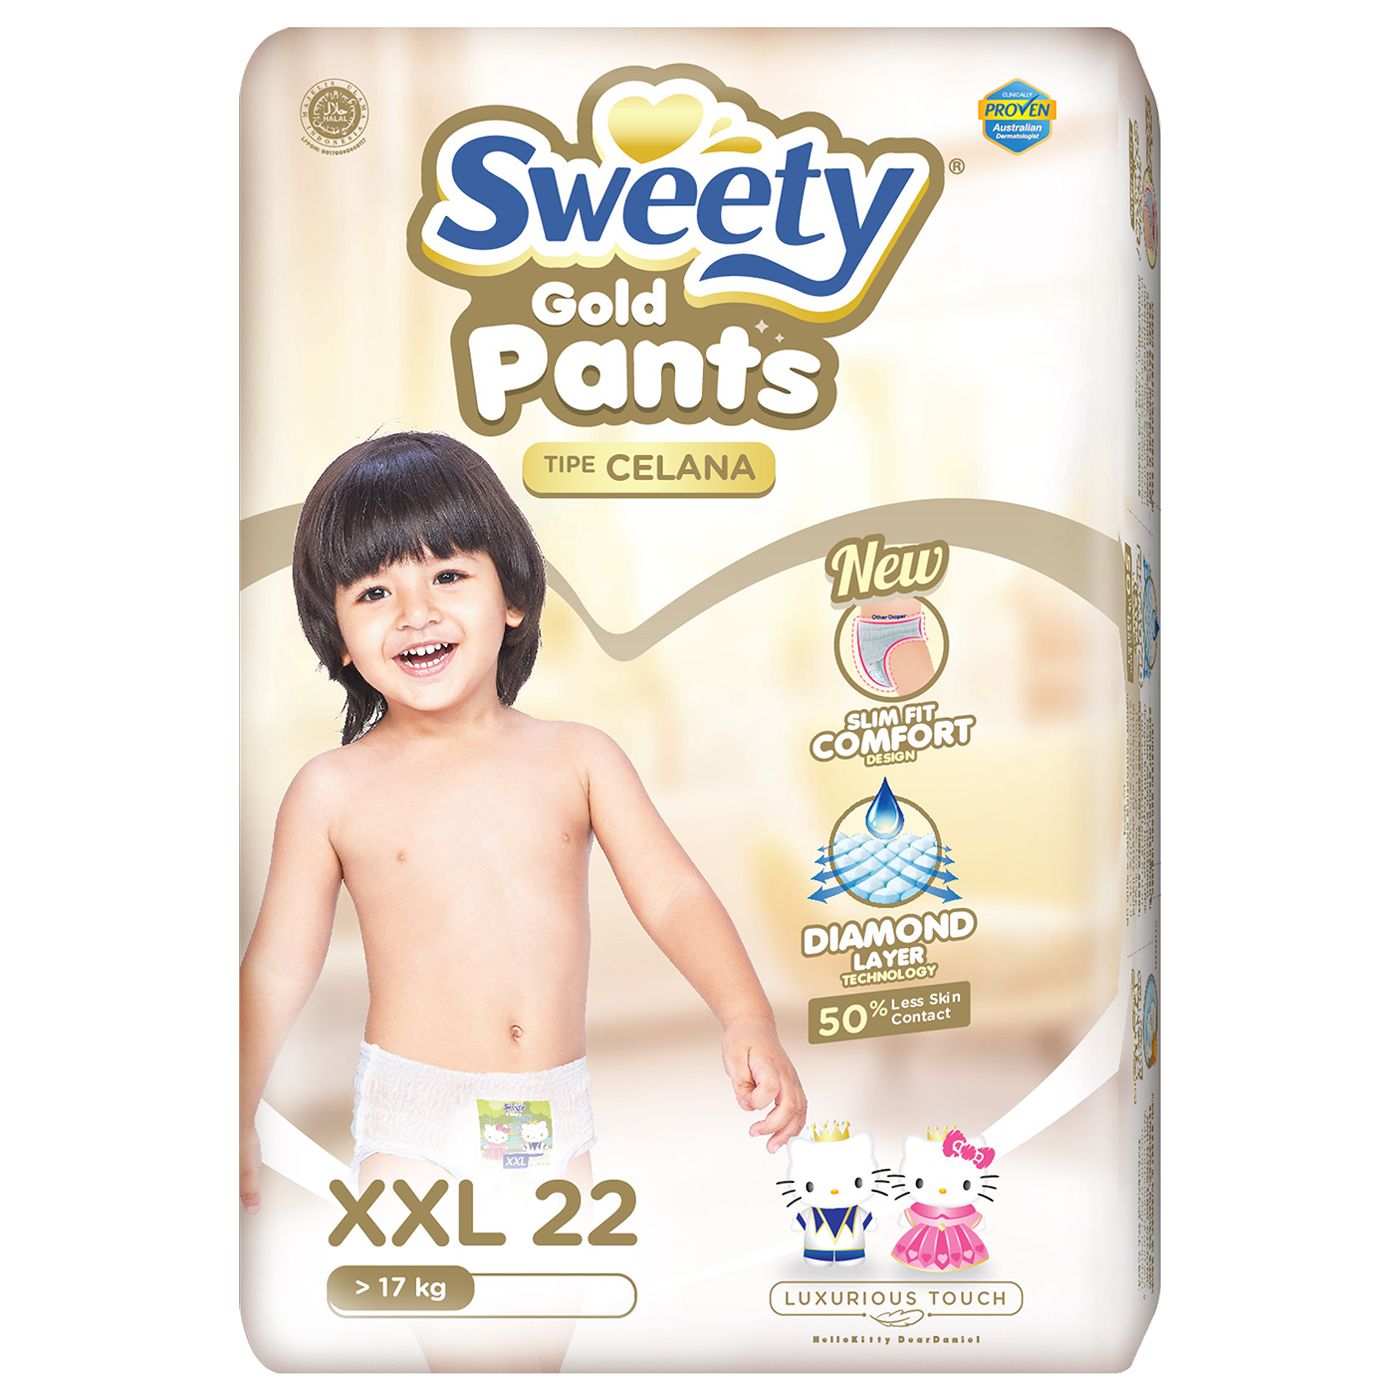 Sweety Pantz Gold Regular Pack XXL 22 - 2